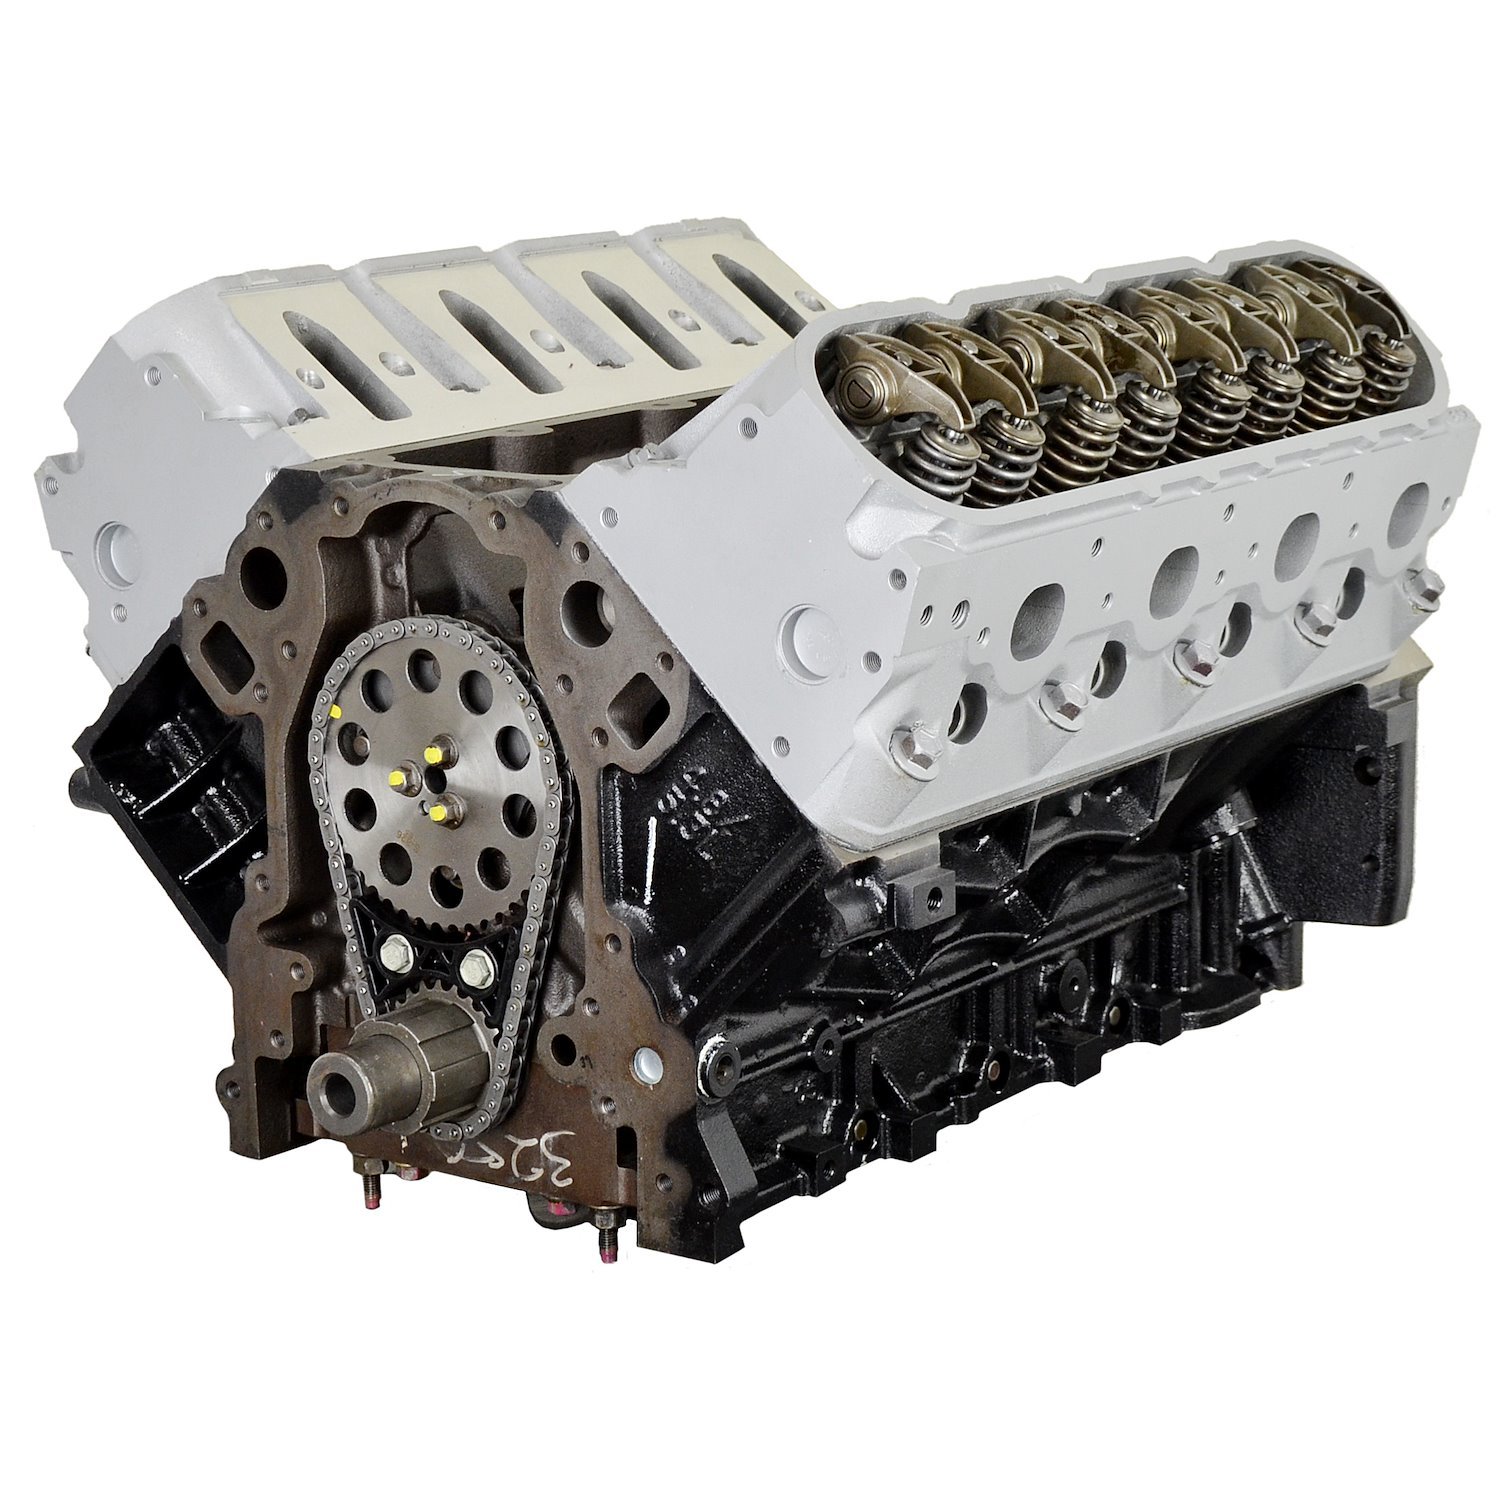 HP97 High Performance Crate Engine GM LM7 5.3L [385 HP/390 TQ]